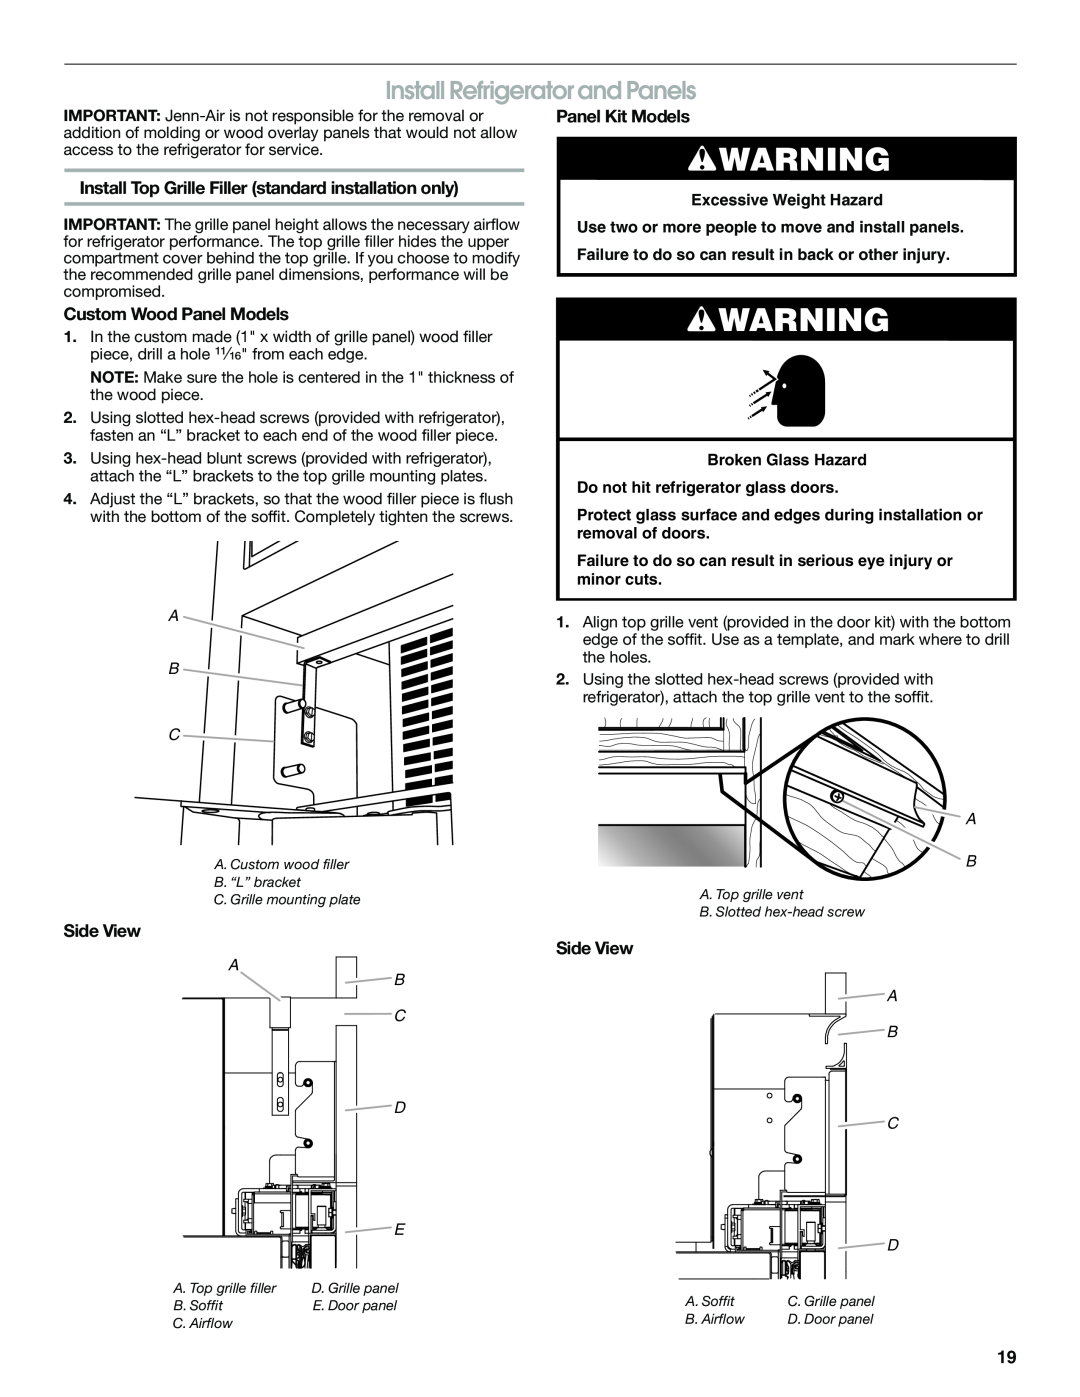 Jenn-Air W10379136B manual Install Refrigerator and Panels, Custom Wood Panel Models, Side View, Panel Kit Models, A B C 